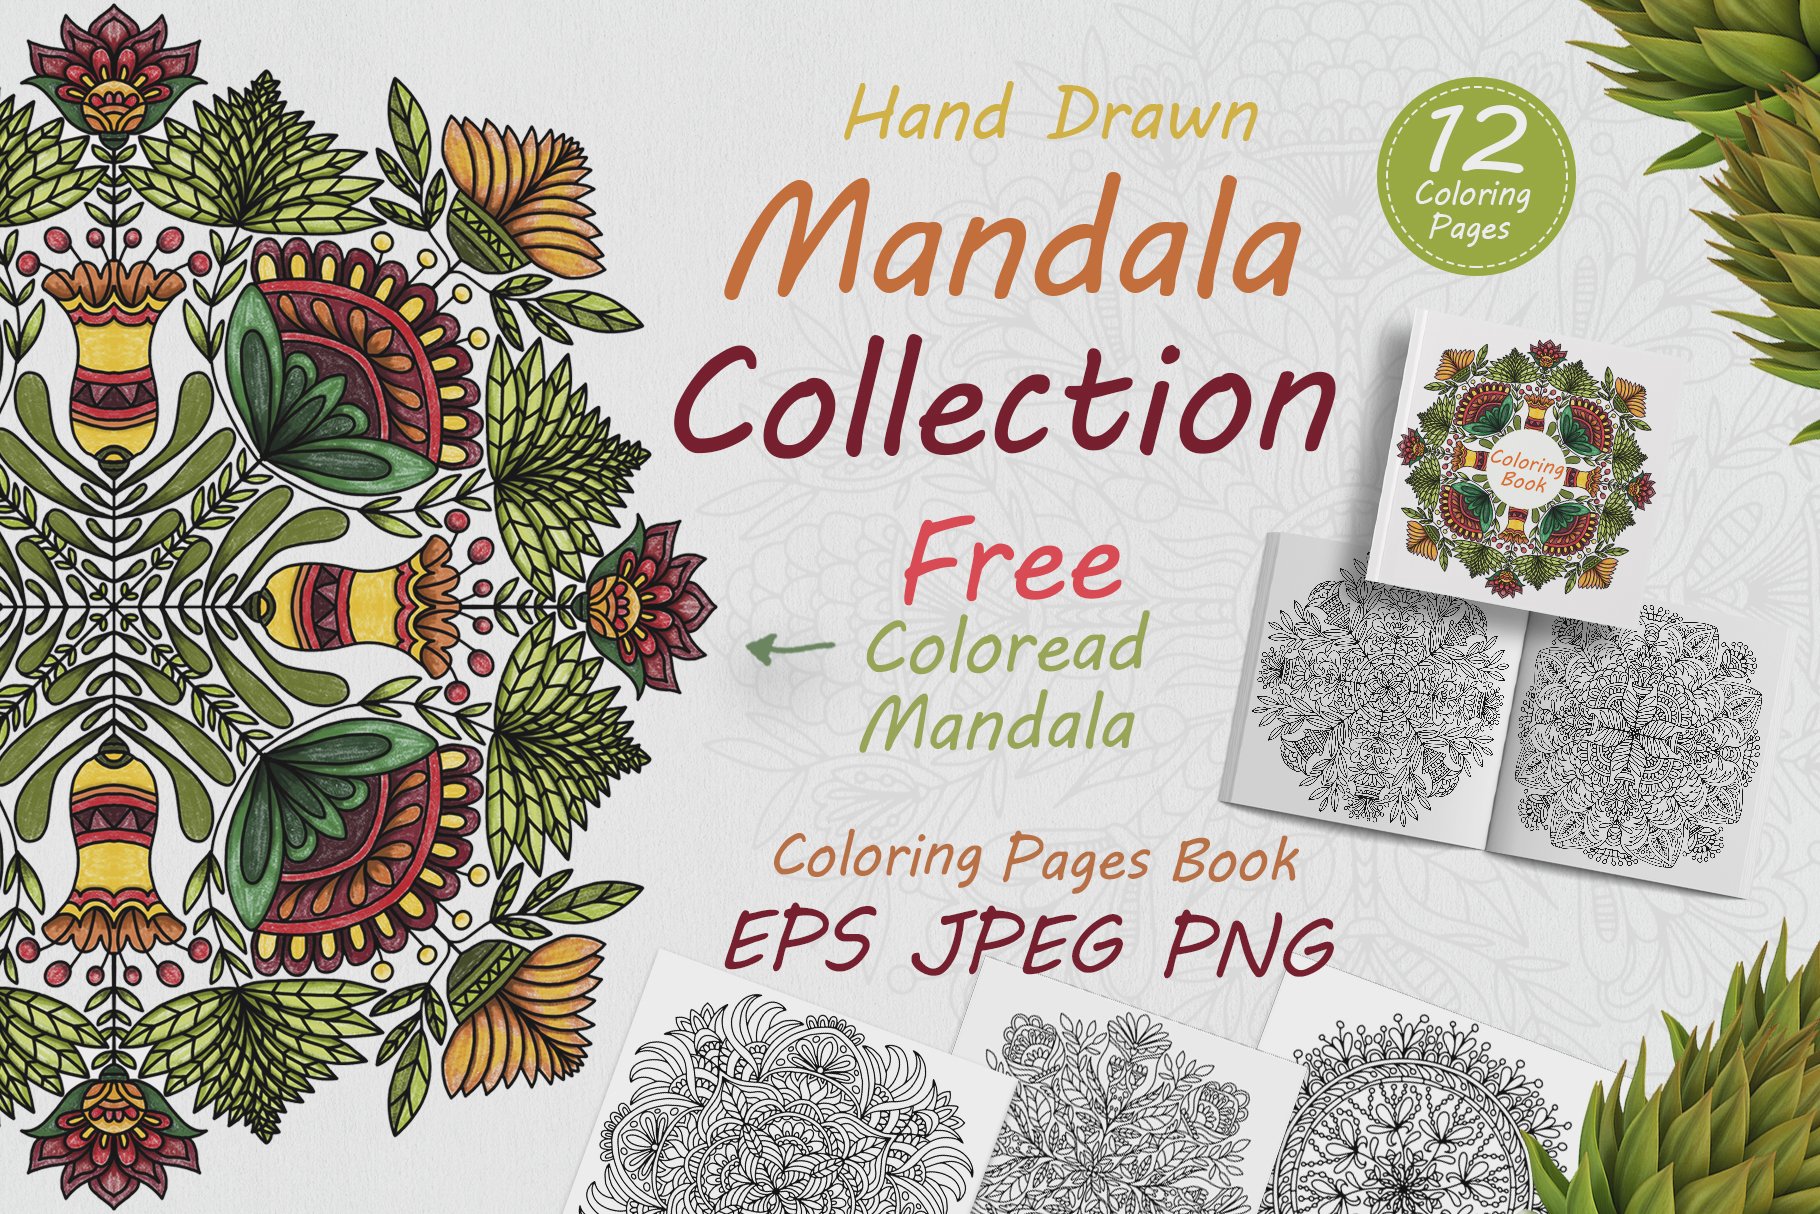 Drawn mandalas in folk style flowercover image.